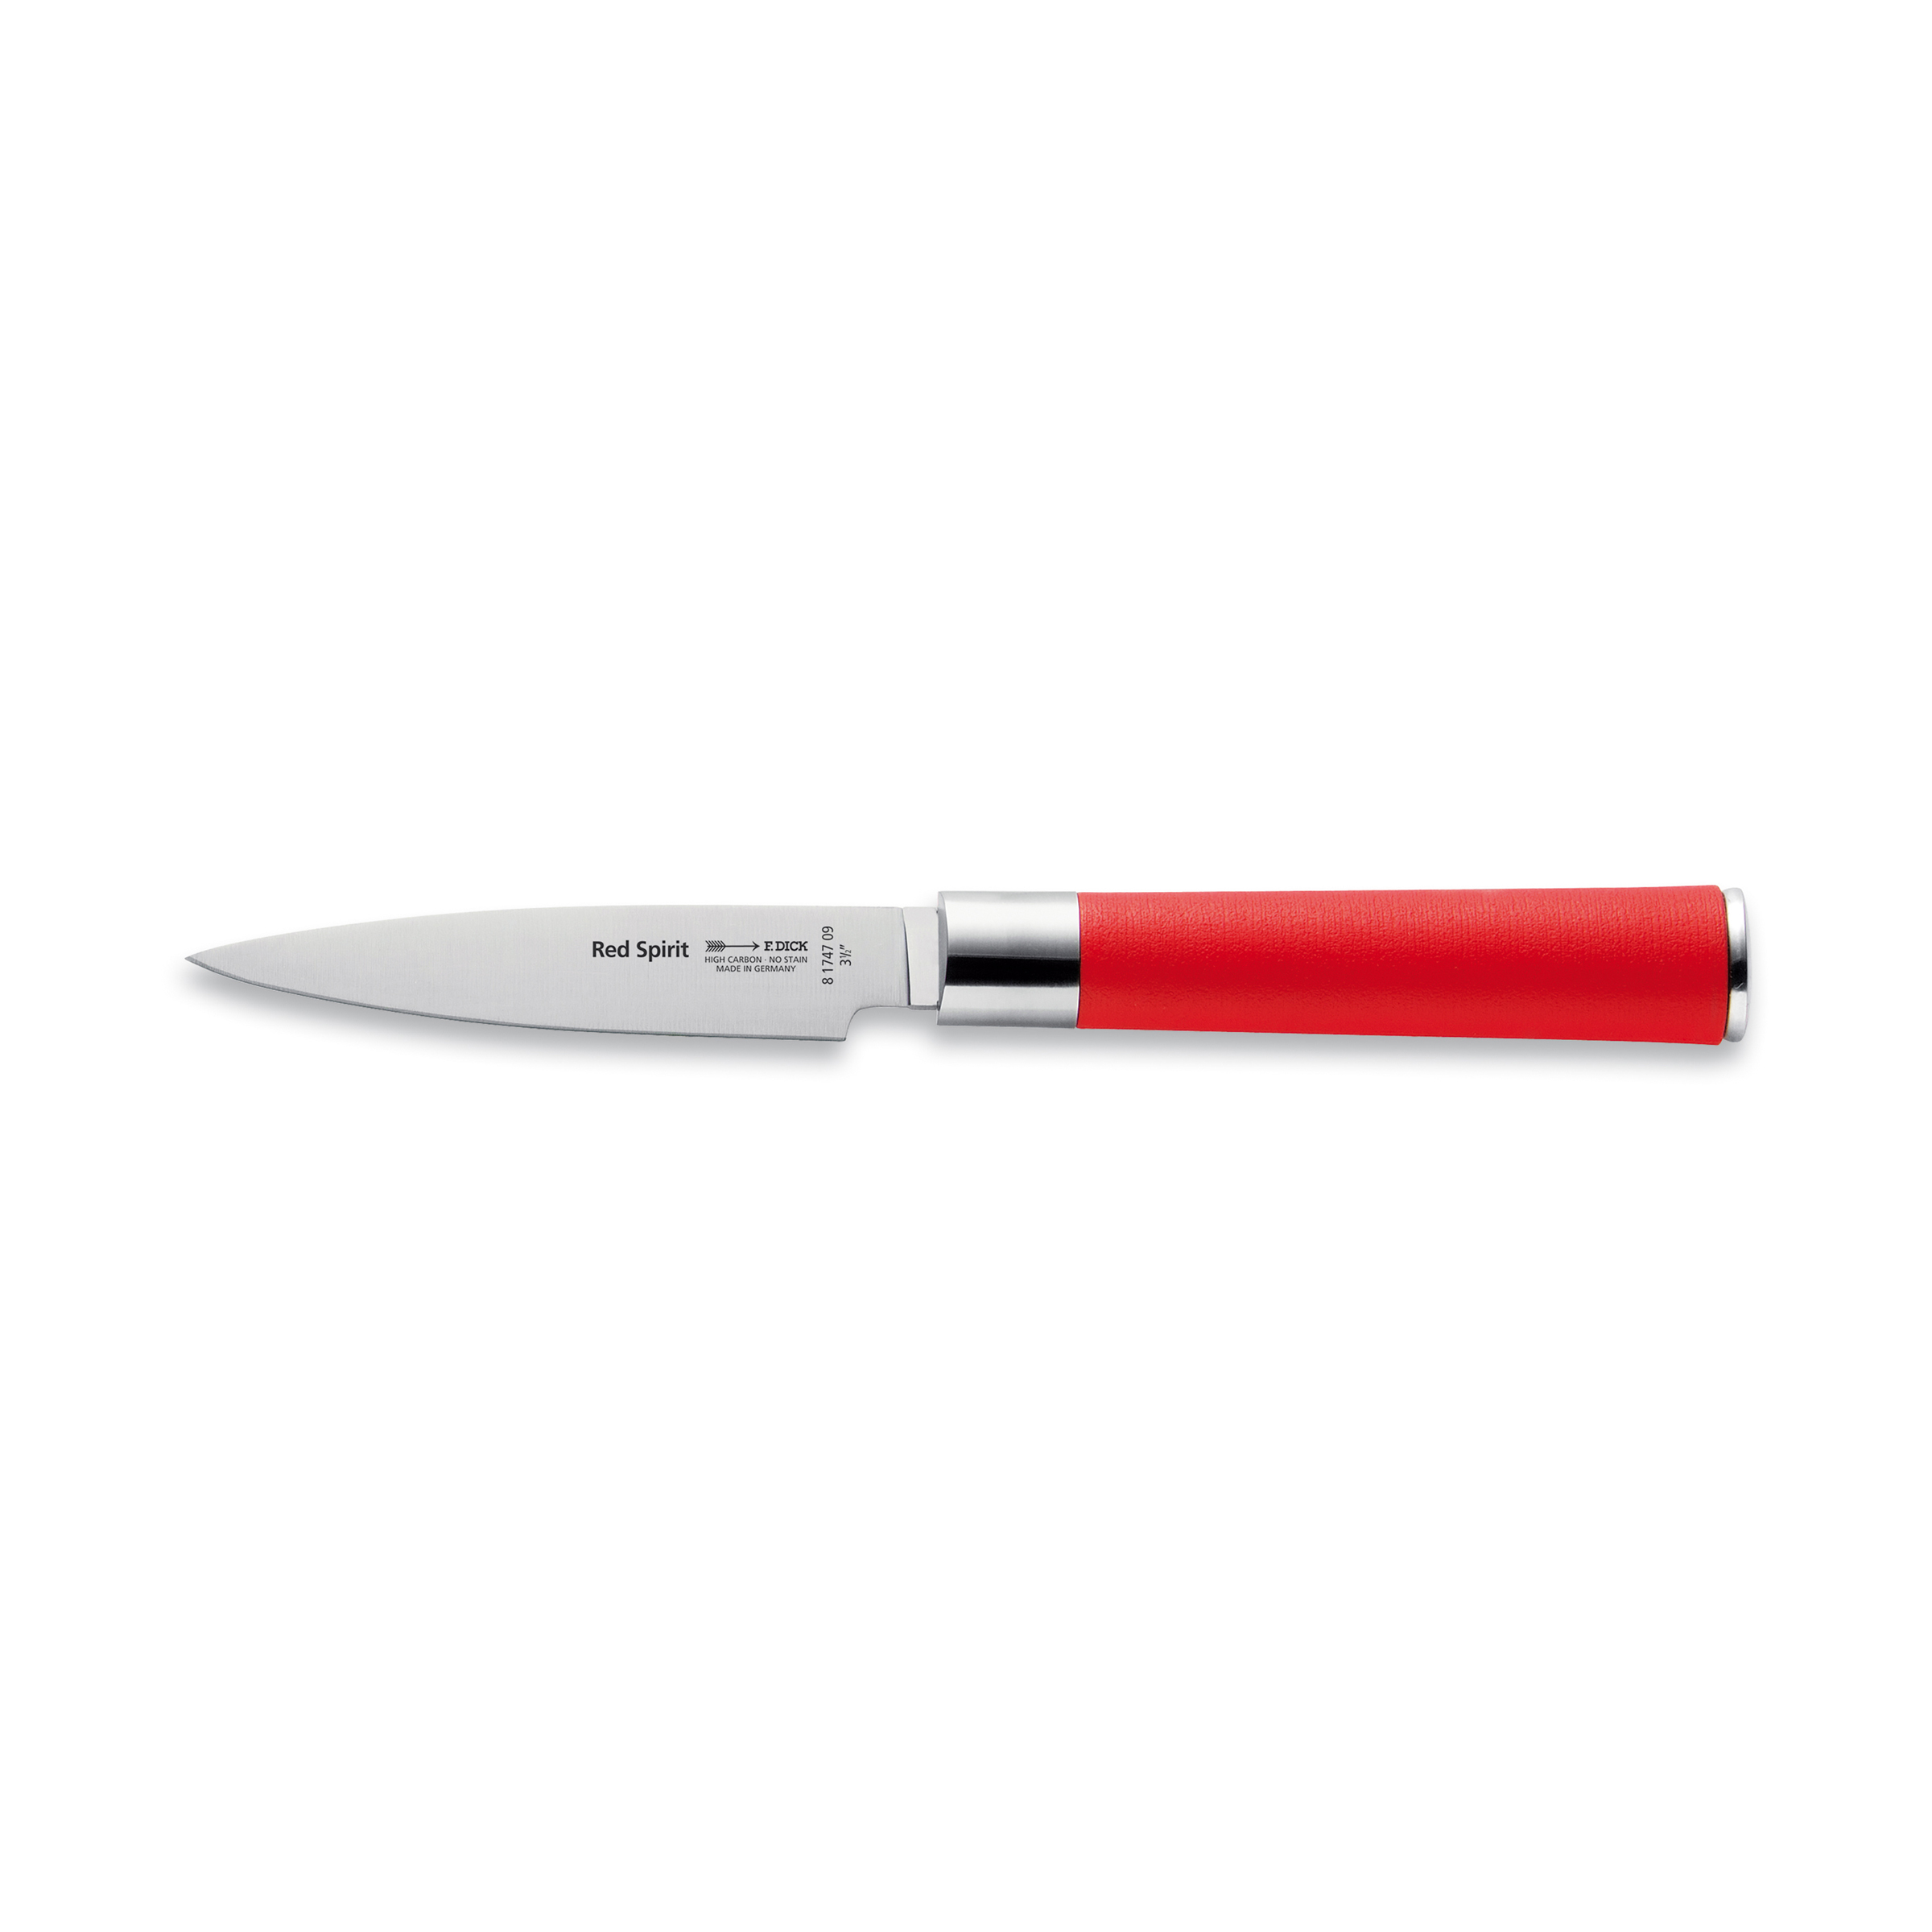 Dick® Red Spirit Officemesser, 9 cm (8174709)